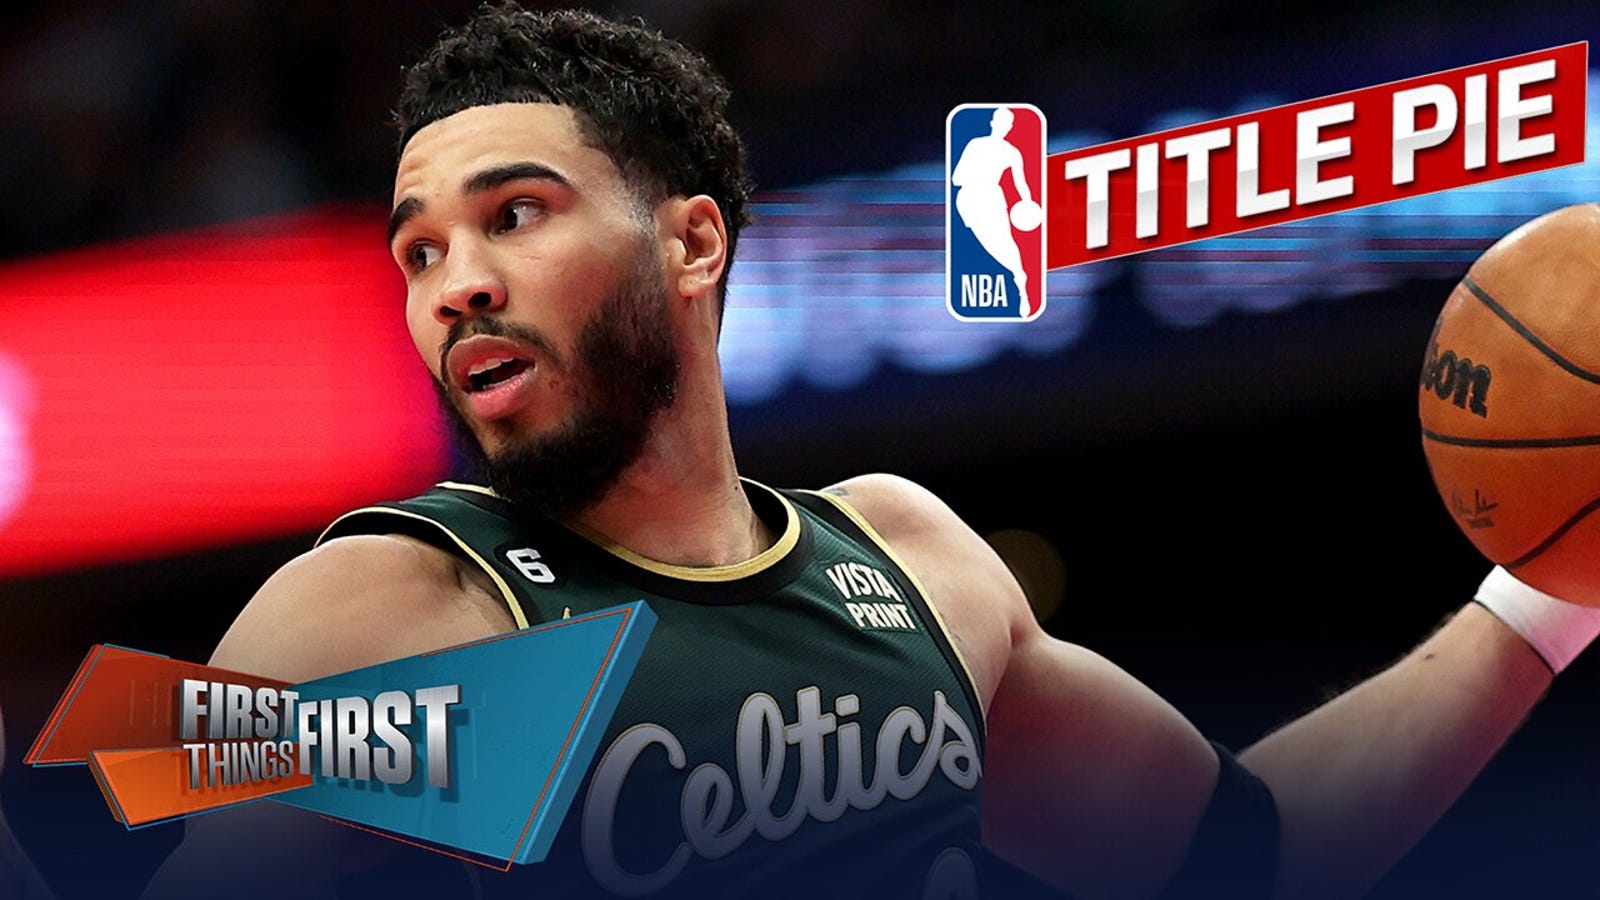 Celtics make a huge leap in Nick Wright's NBA Title Pie